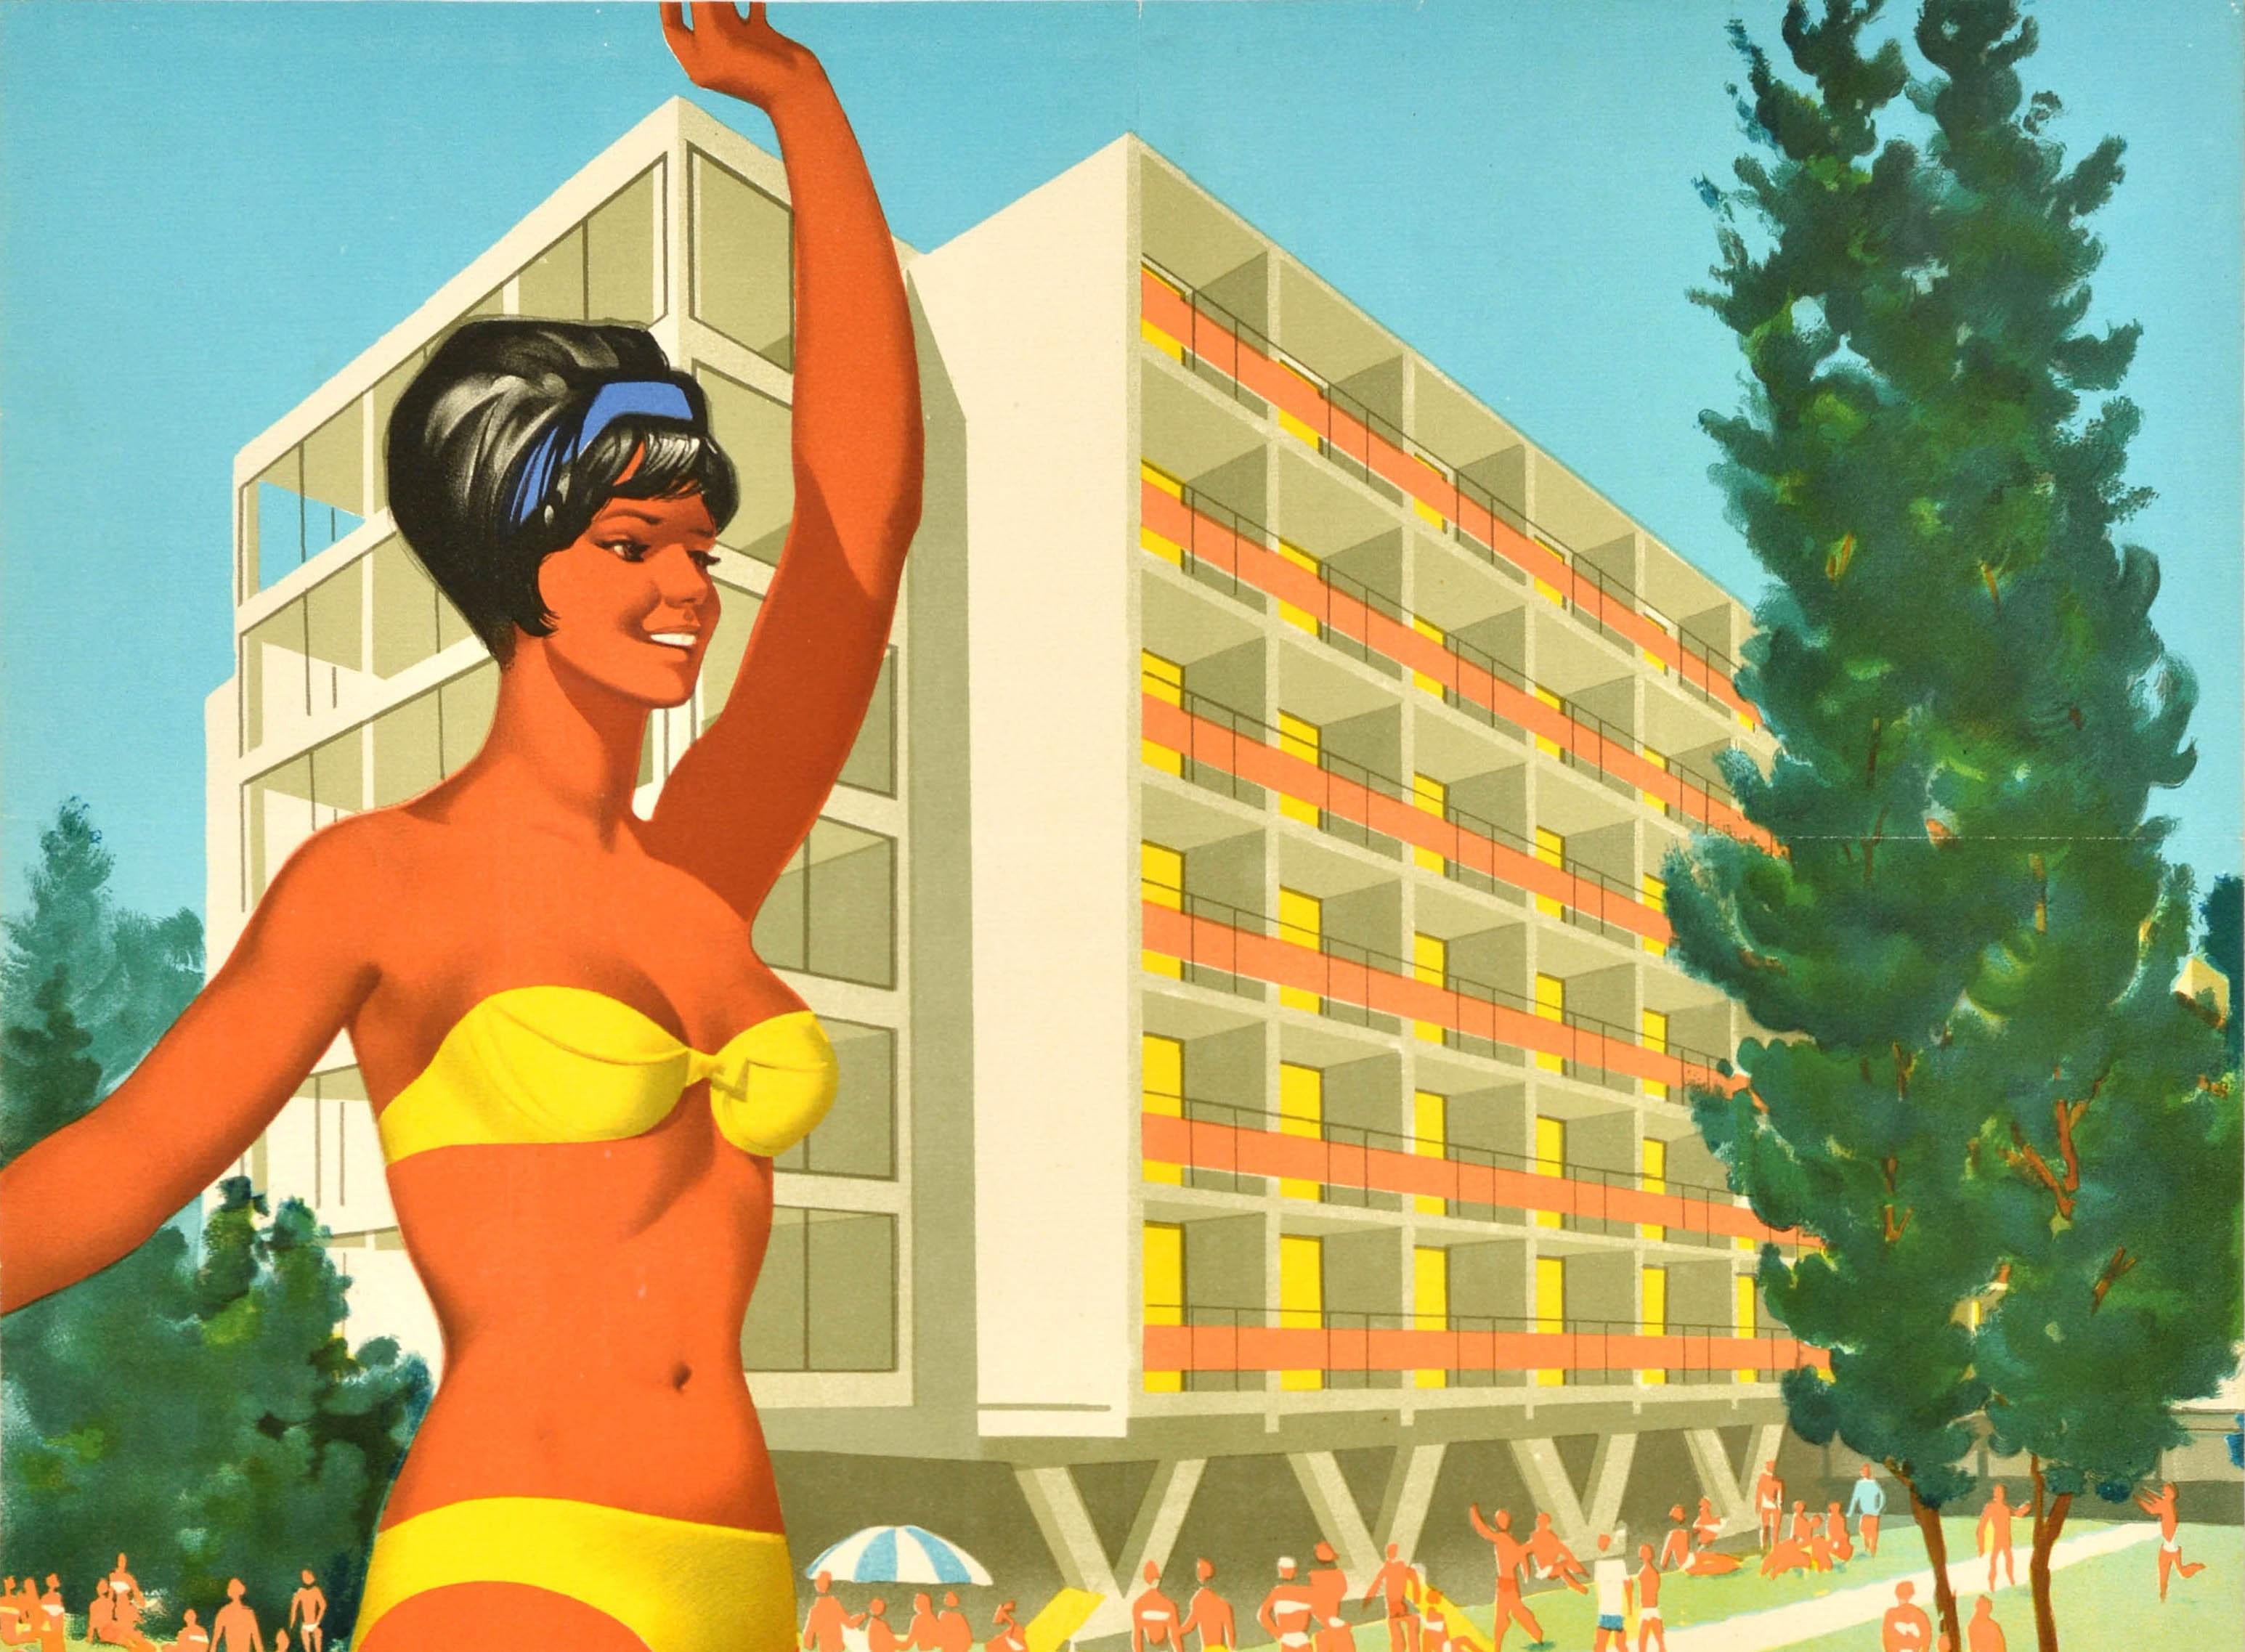 Original Vintage Ibusz Travel Poster Balaton Hungary New Holiday Paradise Resort - Print by Lukacs Bela